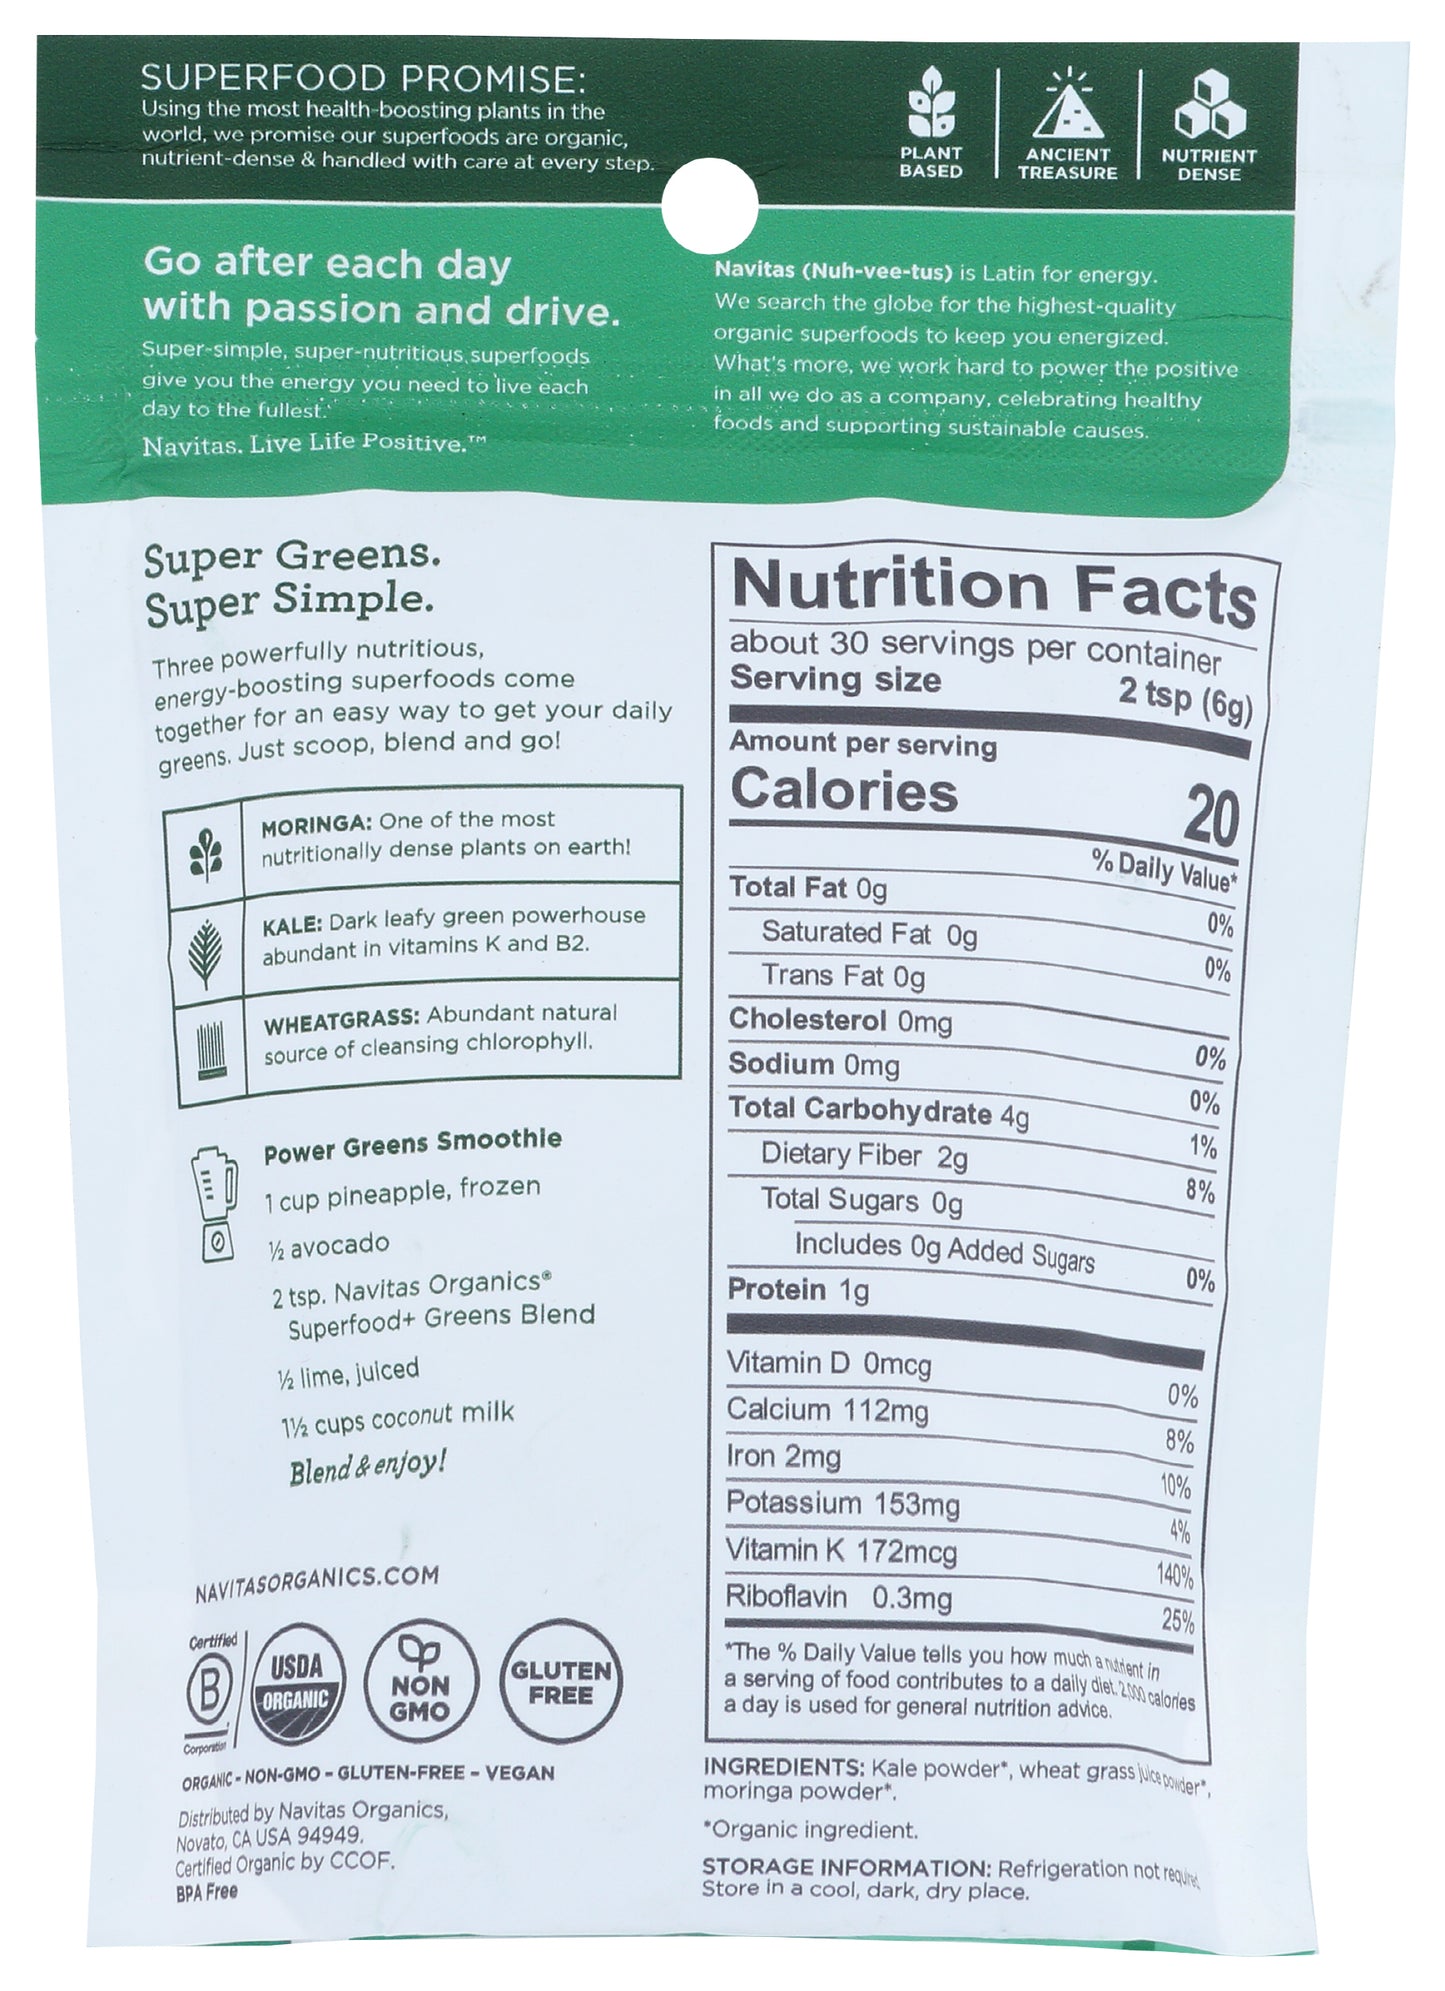 Navitas Organics Superfood+ Greens Blend 6.3oz Back of Bag